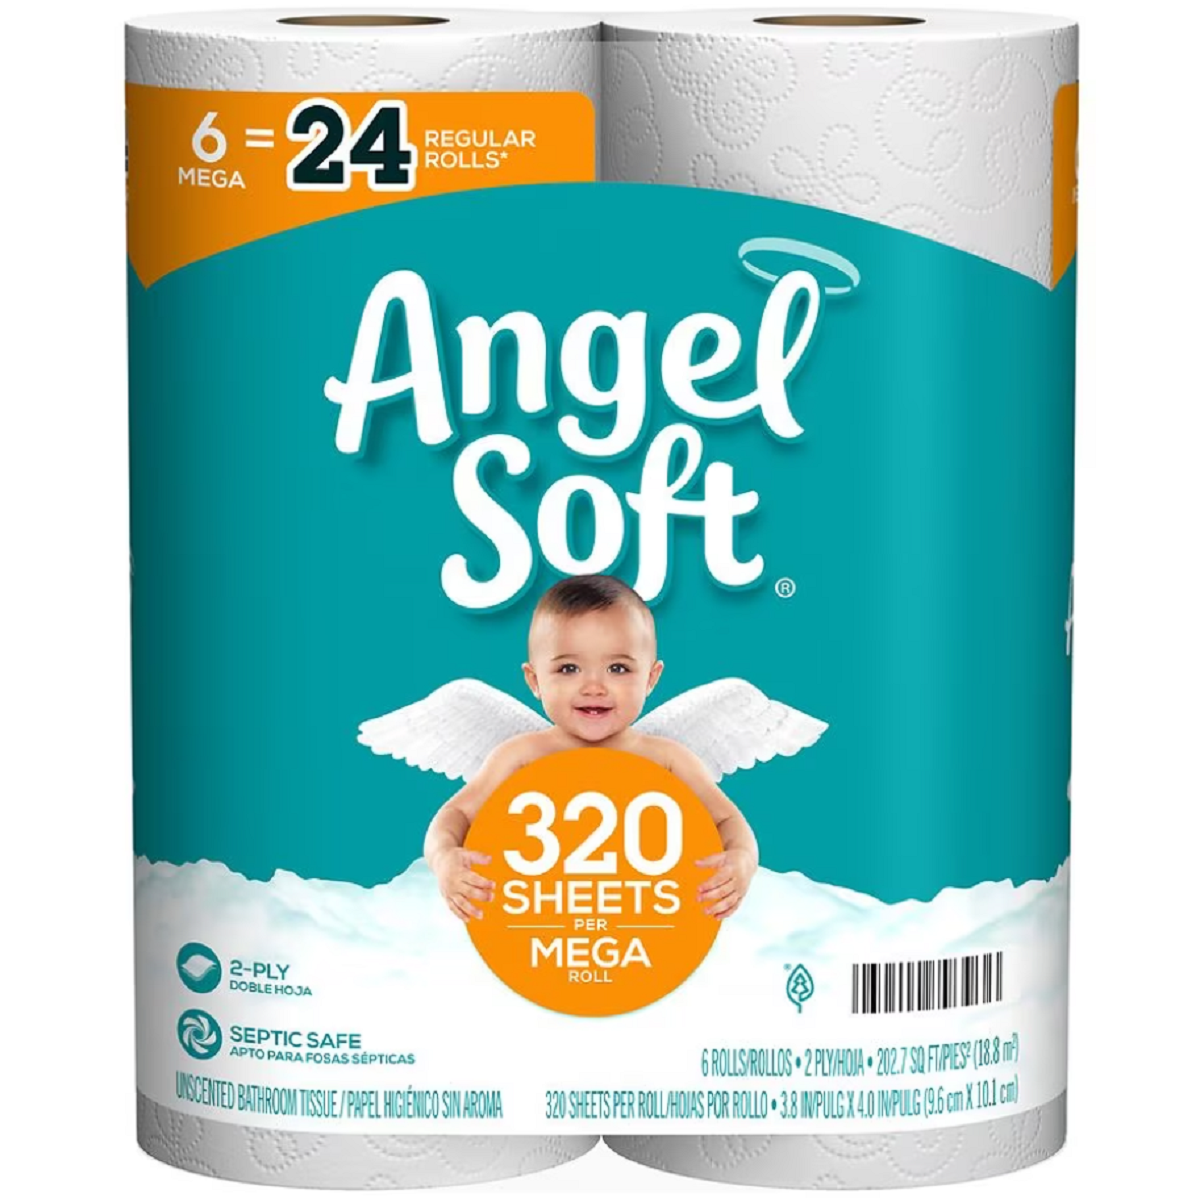 $0.50 Off (1) Angel Soft Bath Tissue Coupon